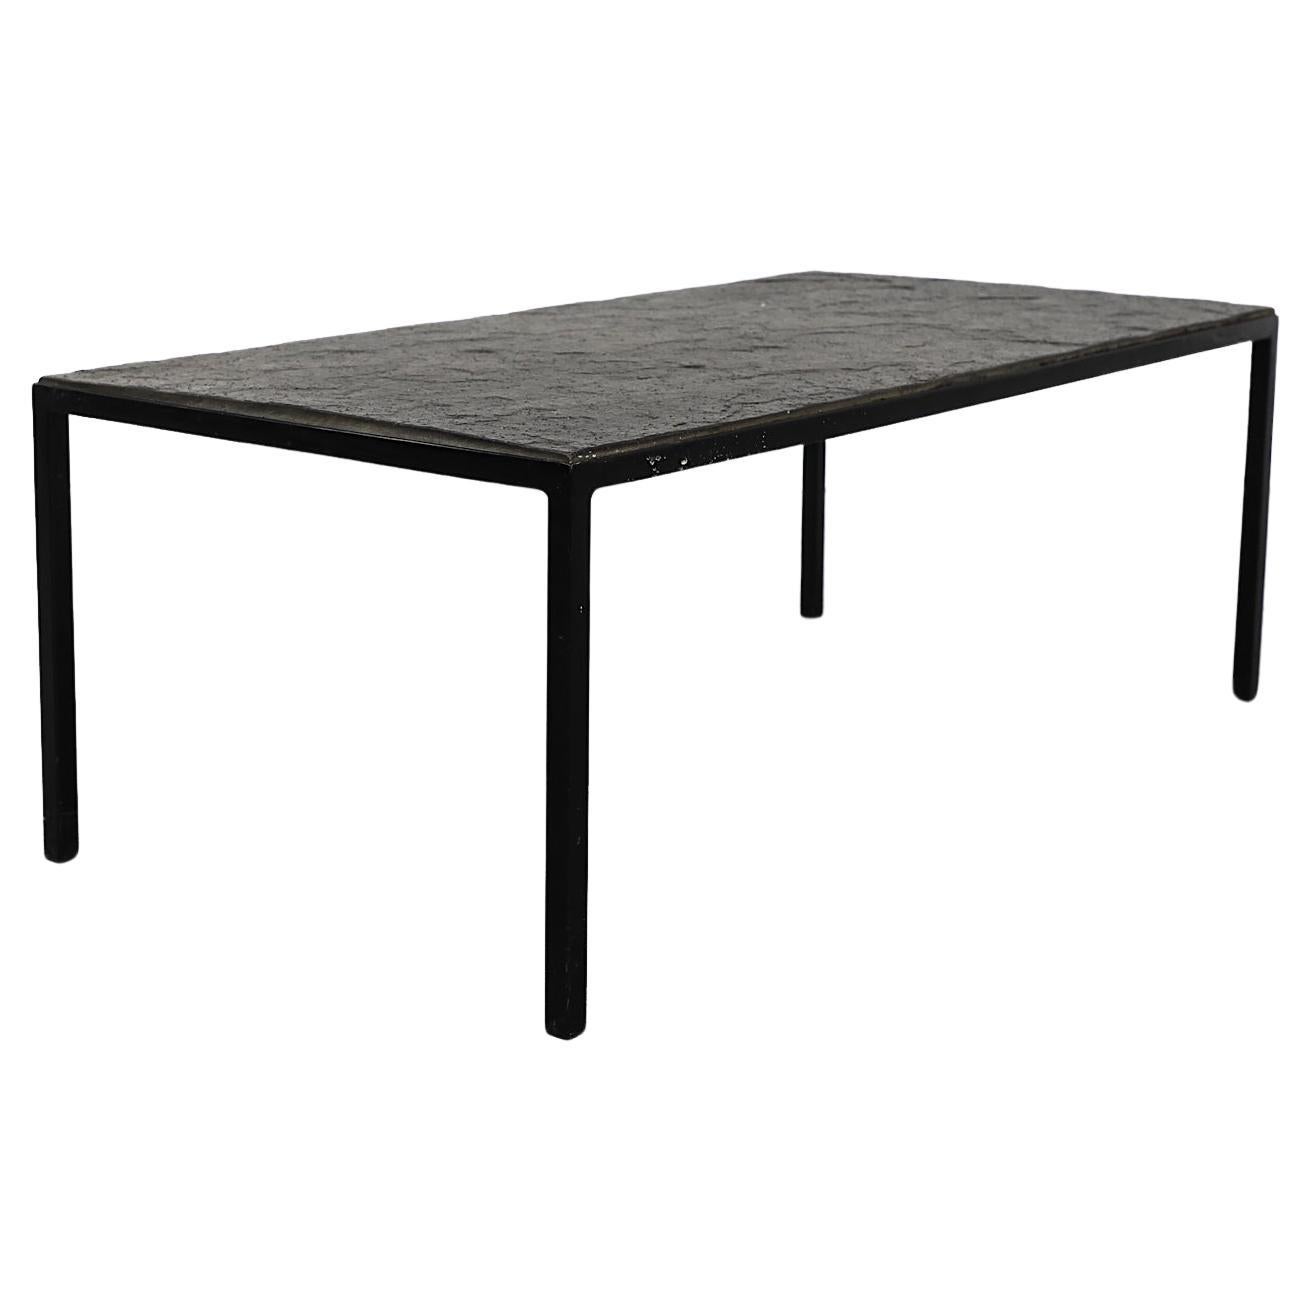 Artimeta Rectangle Coffee Table with Inset Stone Top & Black Enameled Frame